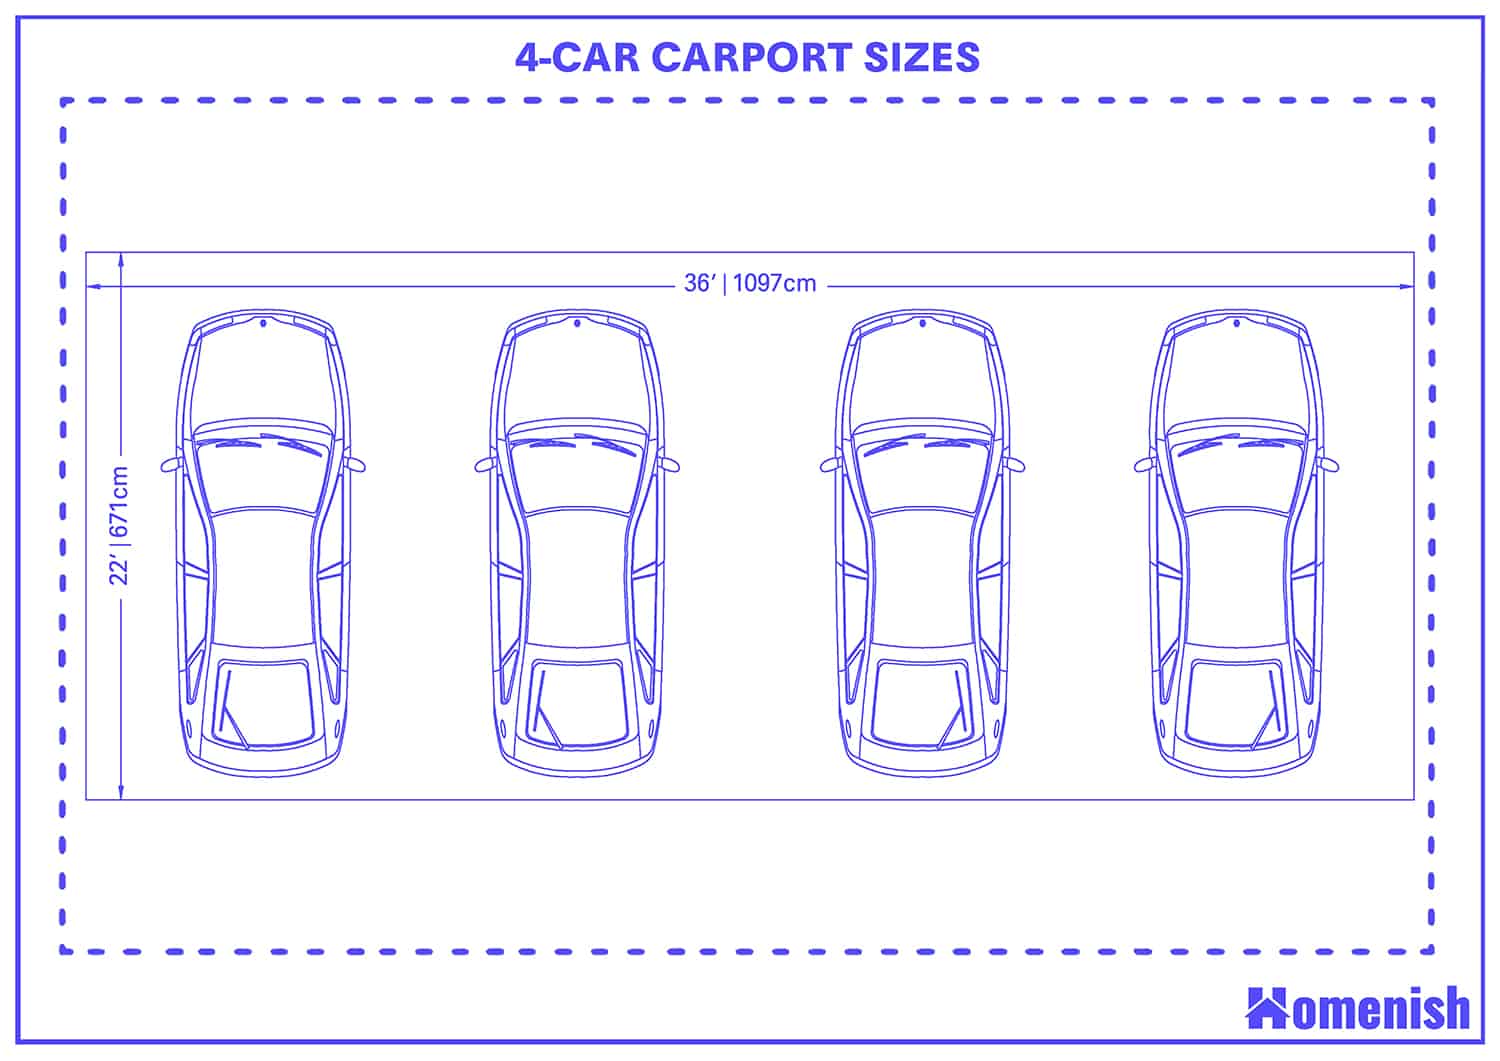 4-Car Carport Sizes